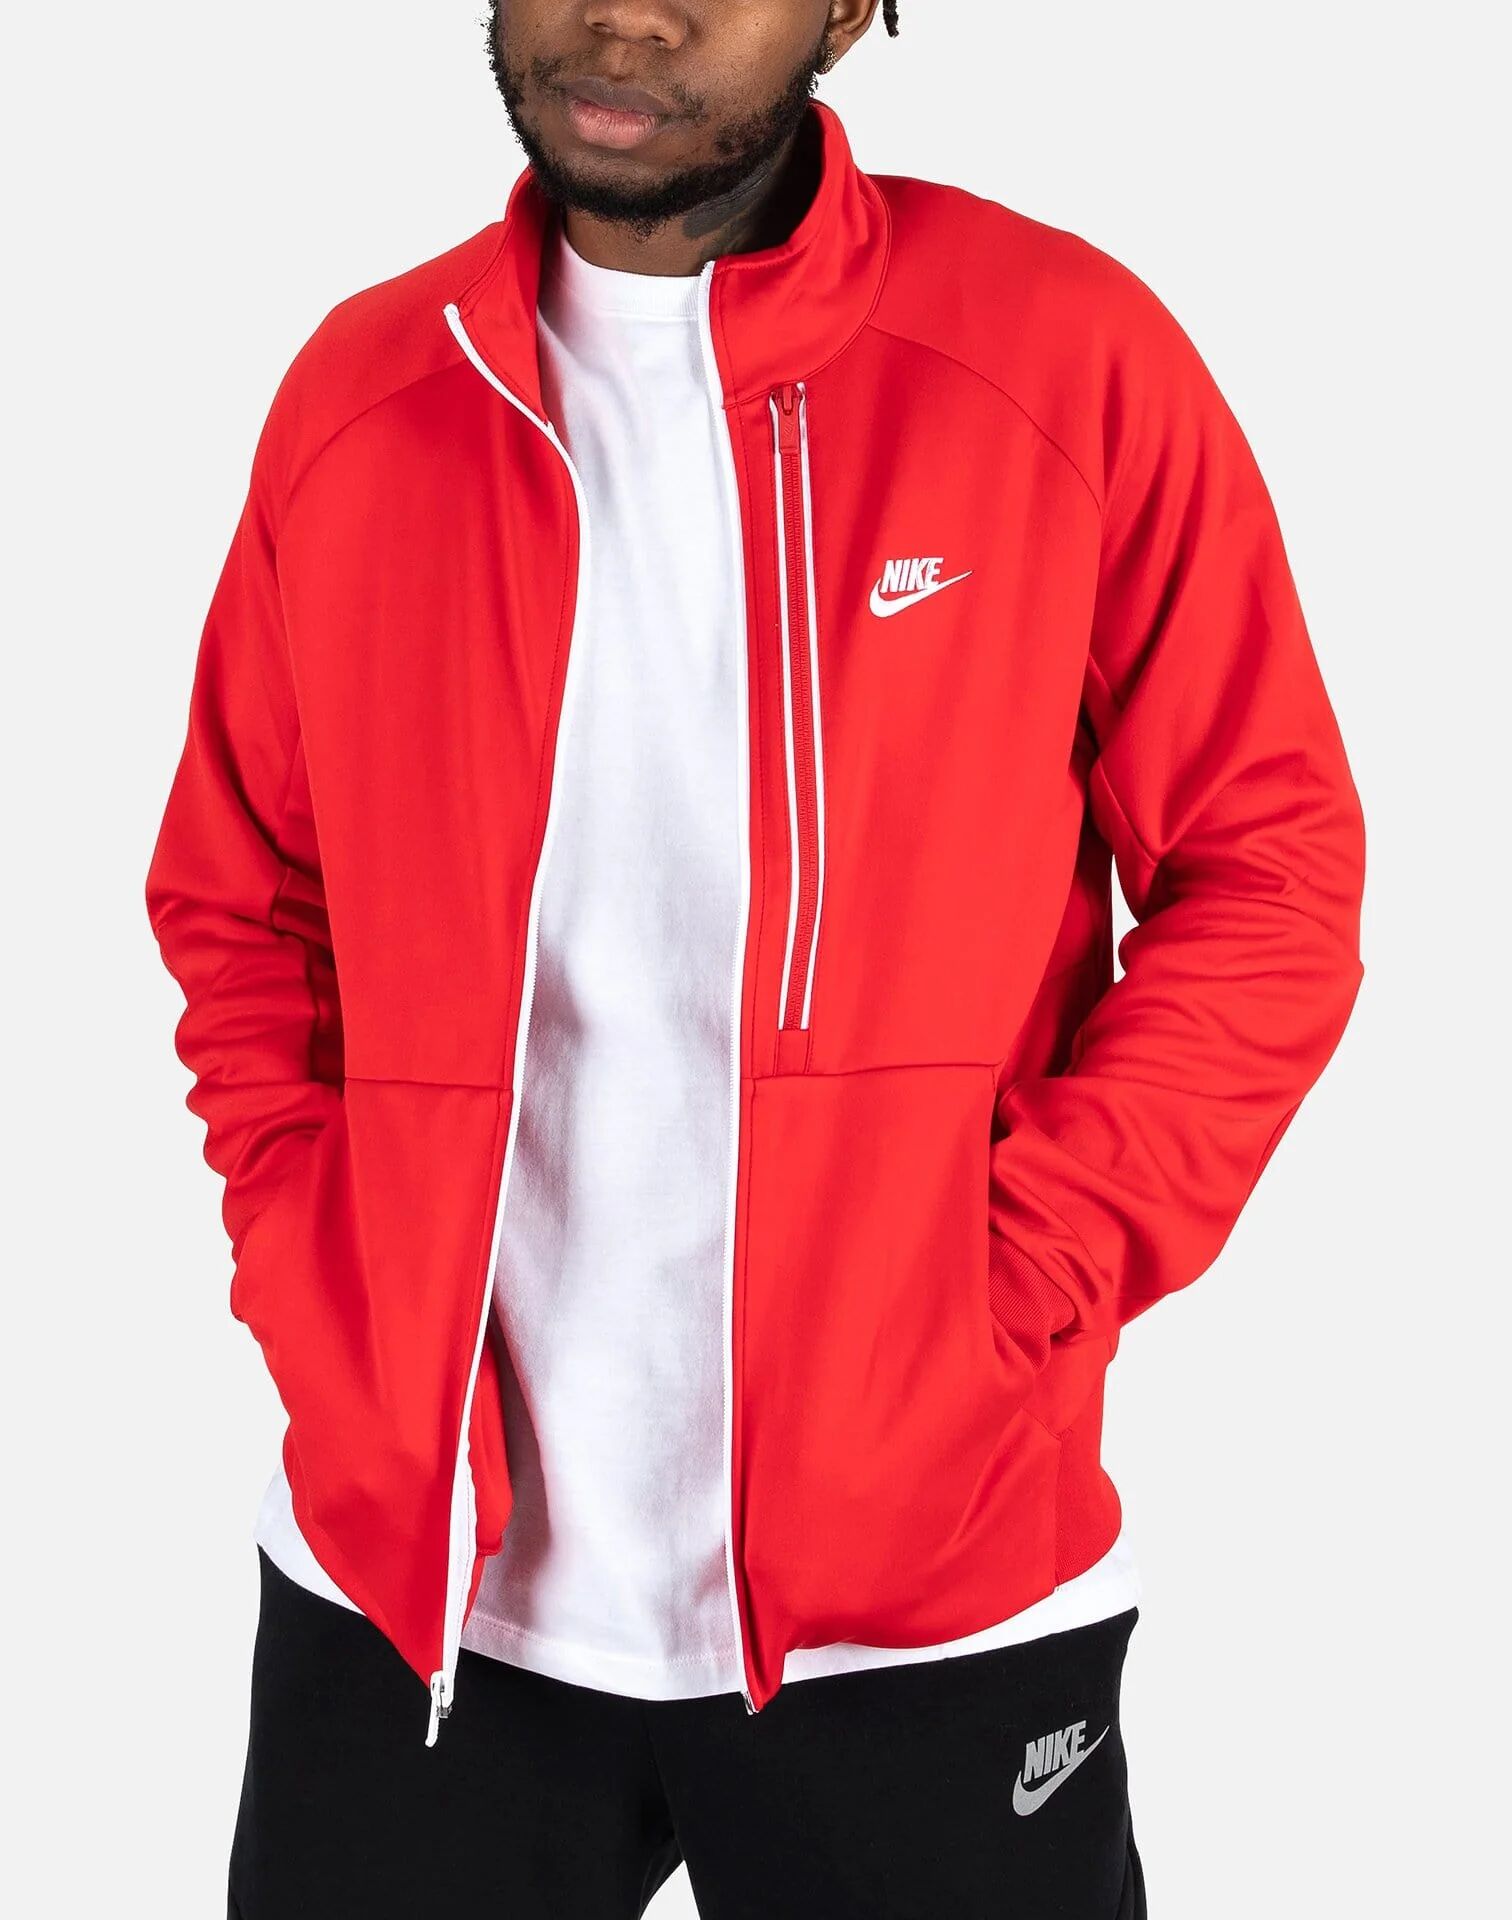 Nike Nsw Tribute N98 Jacket  - Red - Size: LG